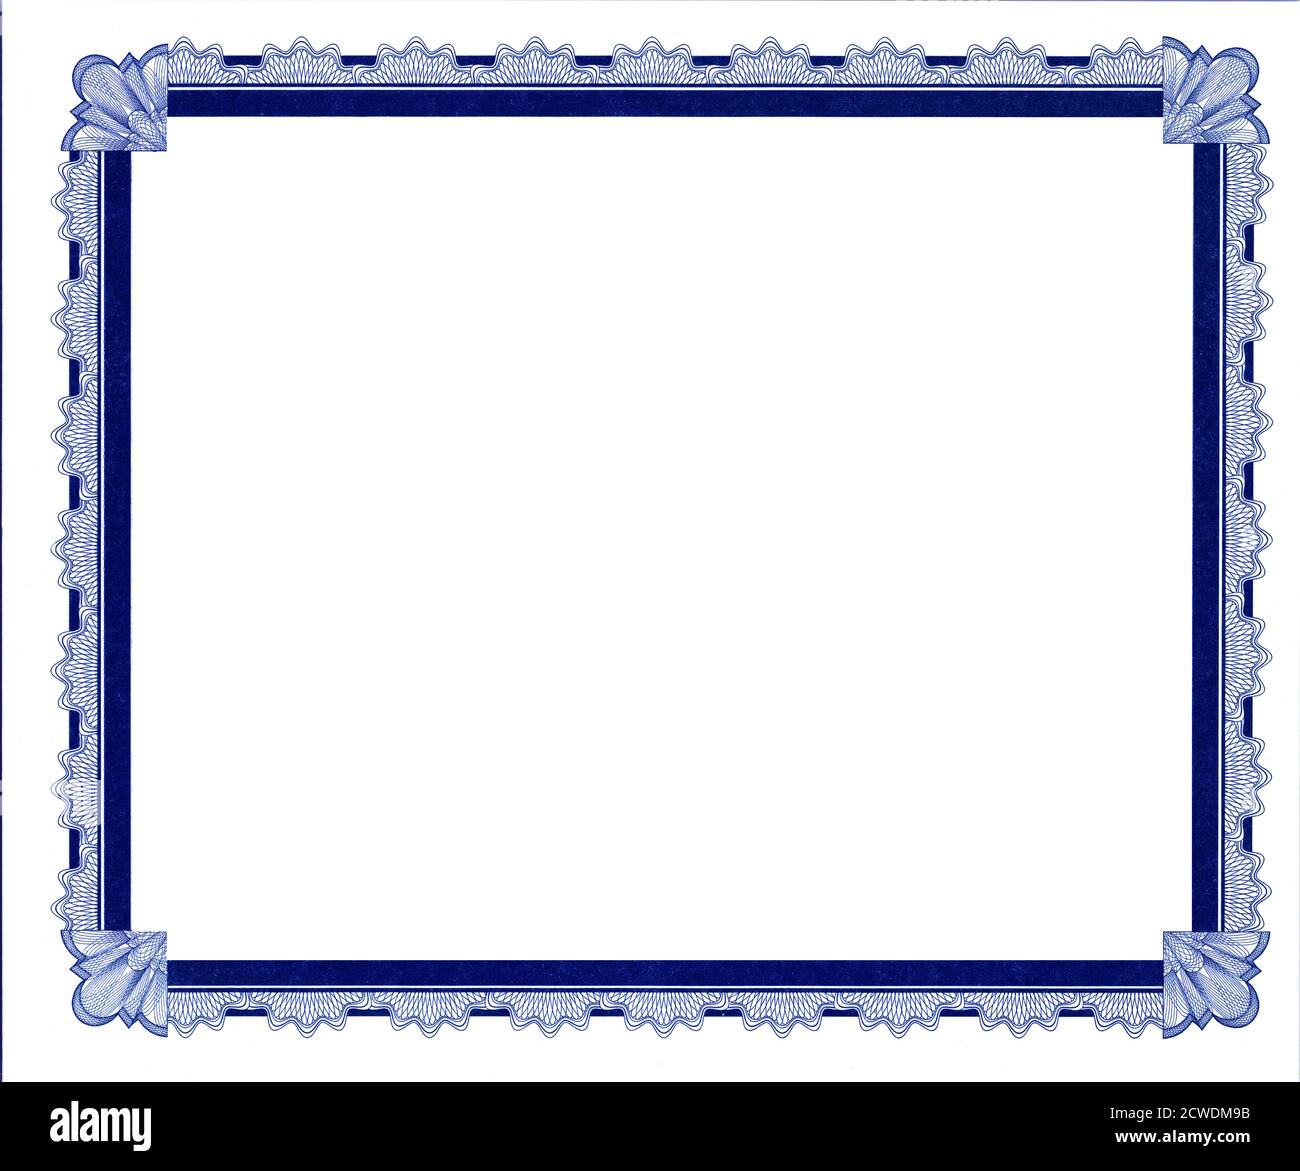 Blue Certificate Border frame blank for awards Stock Photo - Alamy Pertaining To Award Certificate Border Template